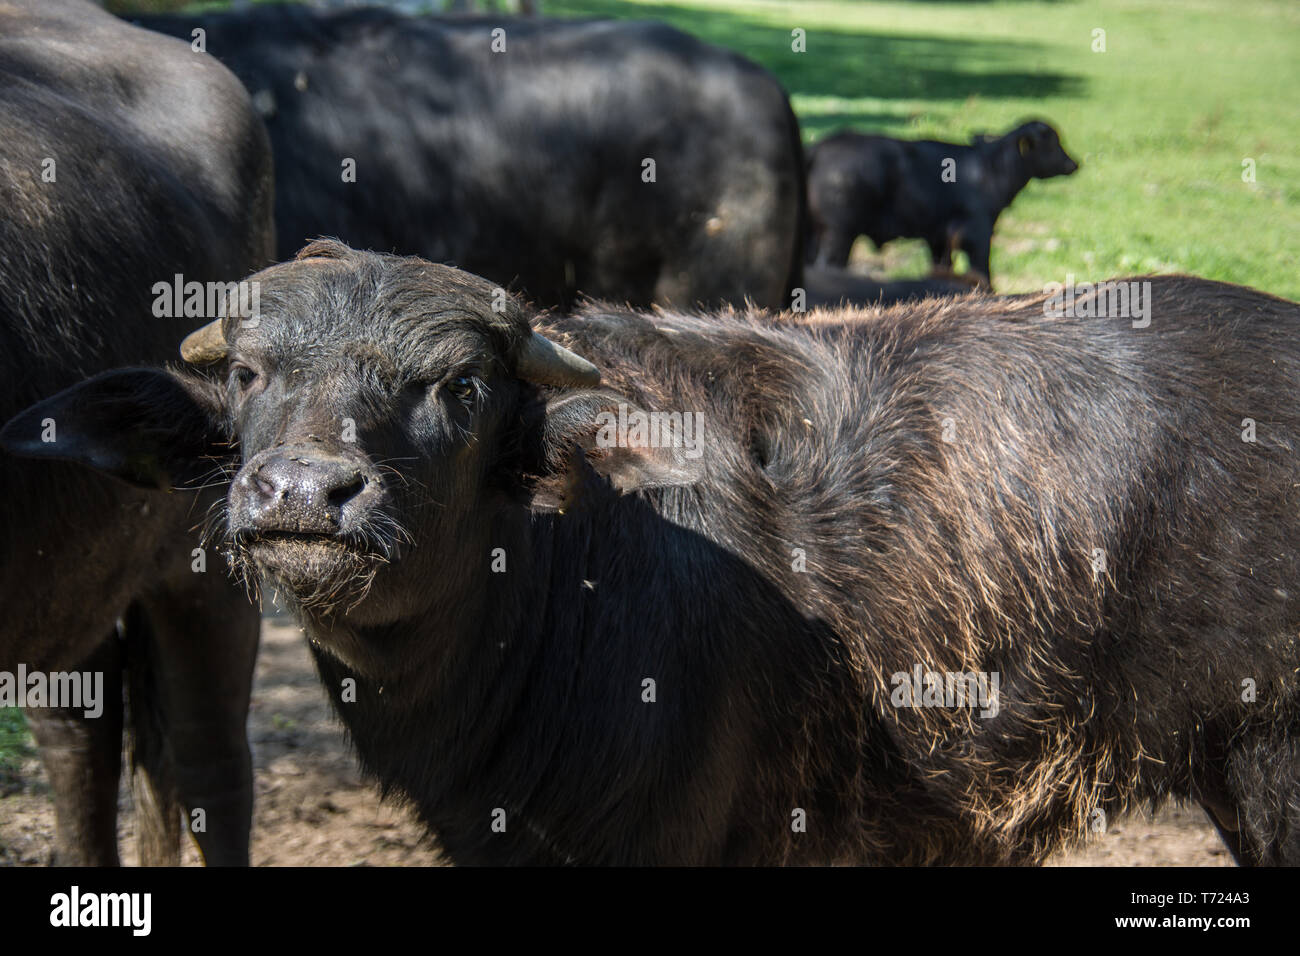 Cattle herd on pasture Stock Photo